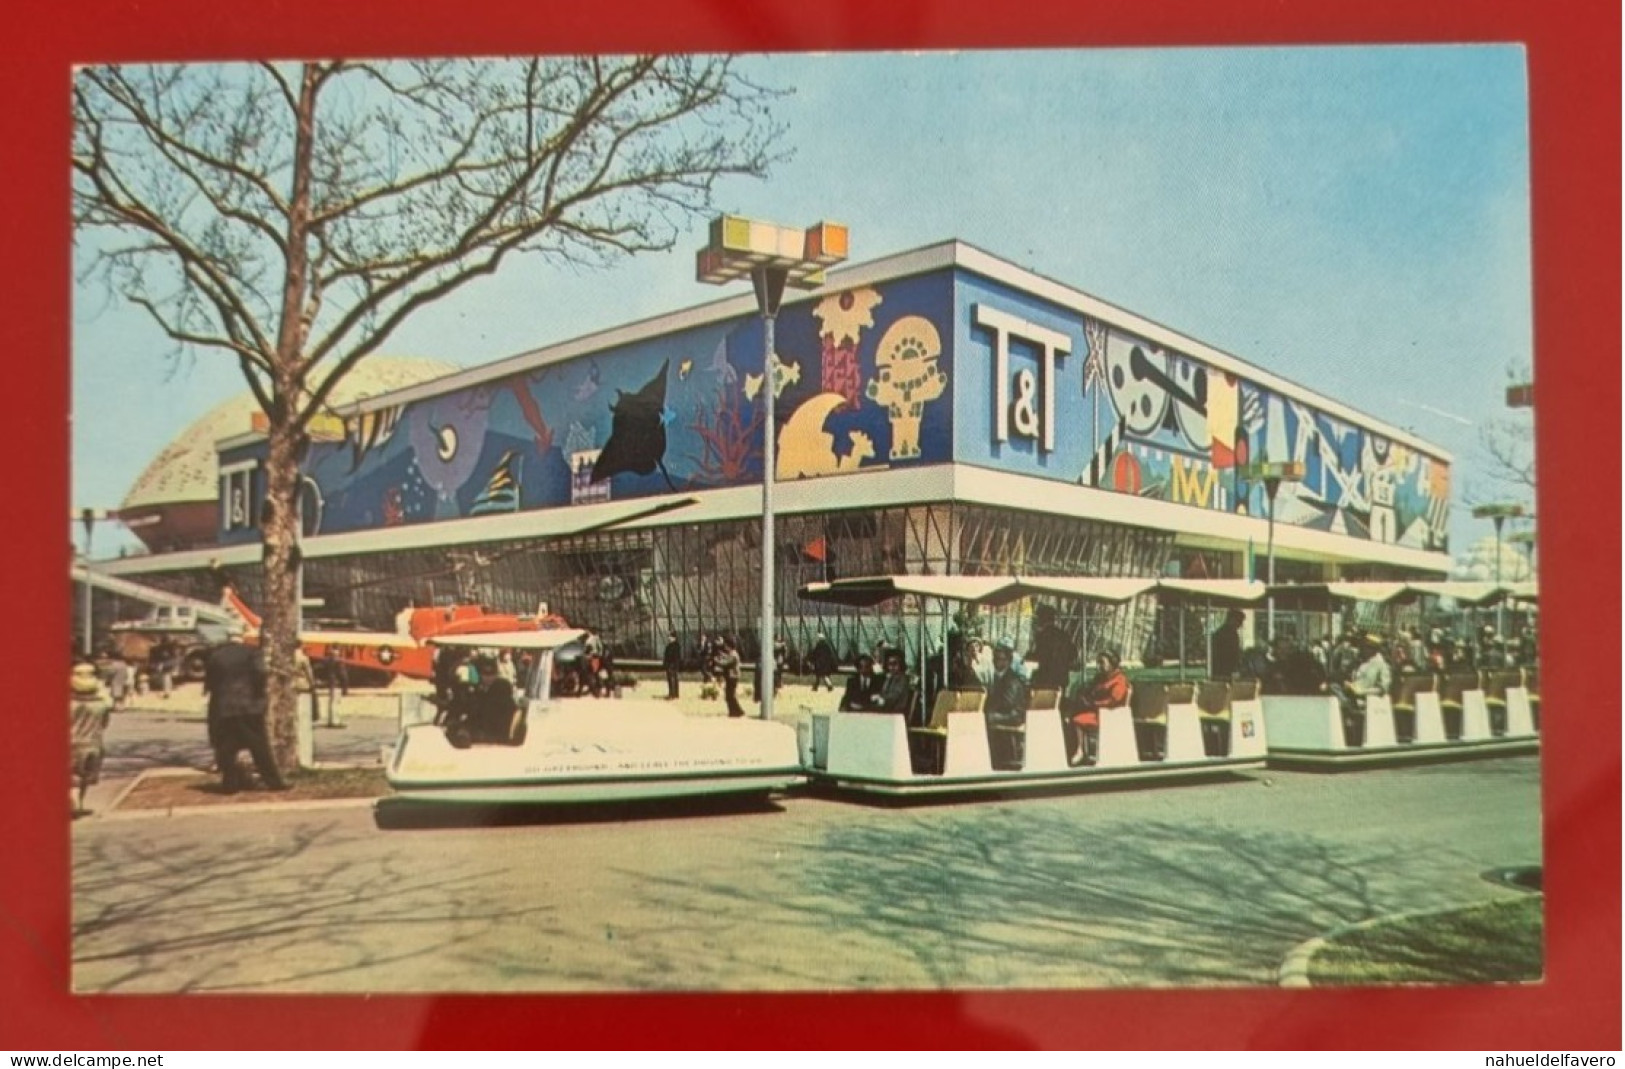 Uncirculated Postcard - USA - NY, NEW YORK WORLD'S FAIR 1964-65 - TRANSPORTATION AND TRAVEL PAVILION - Ausstellungen